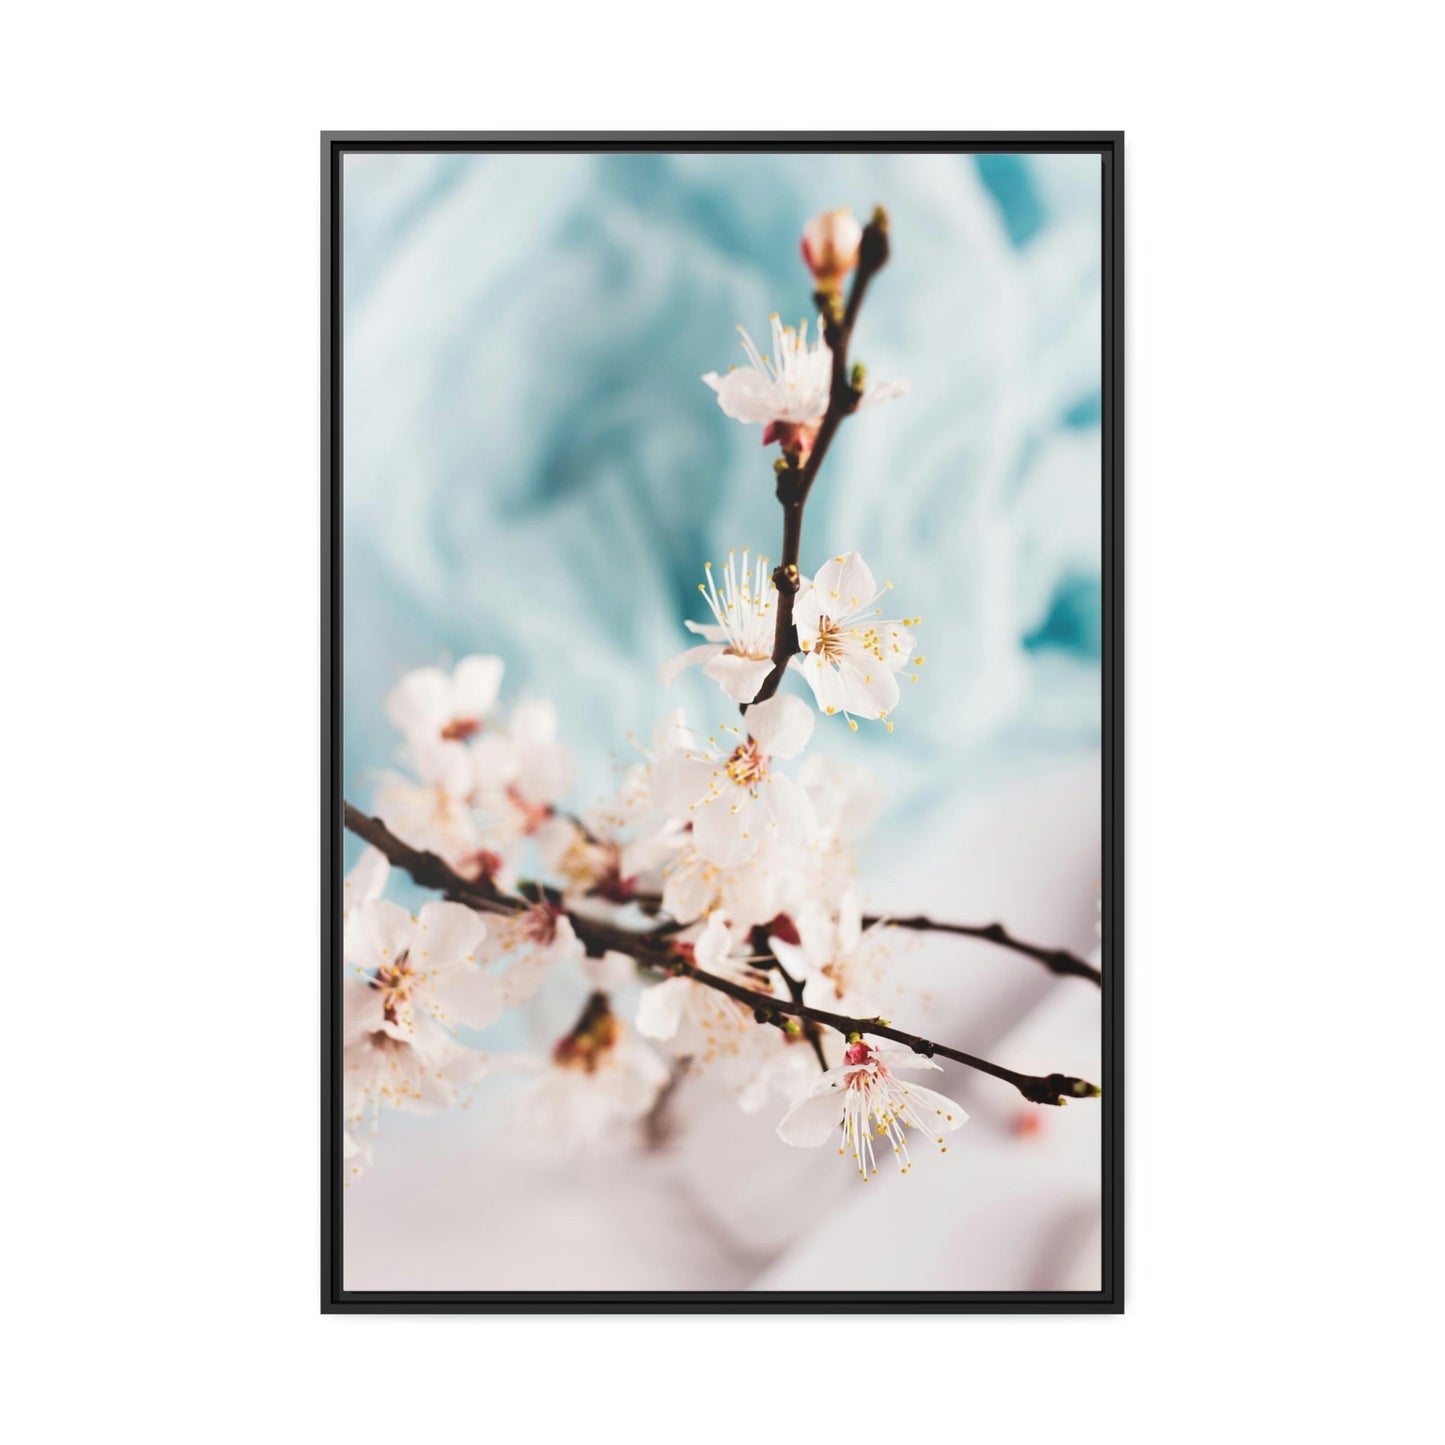 Fragile Elegance: Cherry Blossoms on Artistic Print